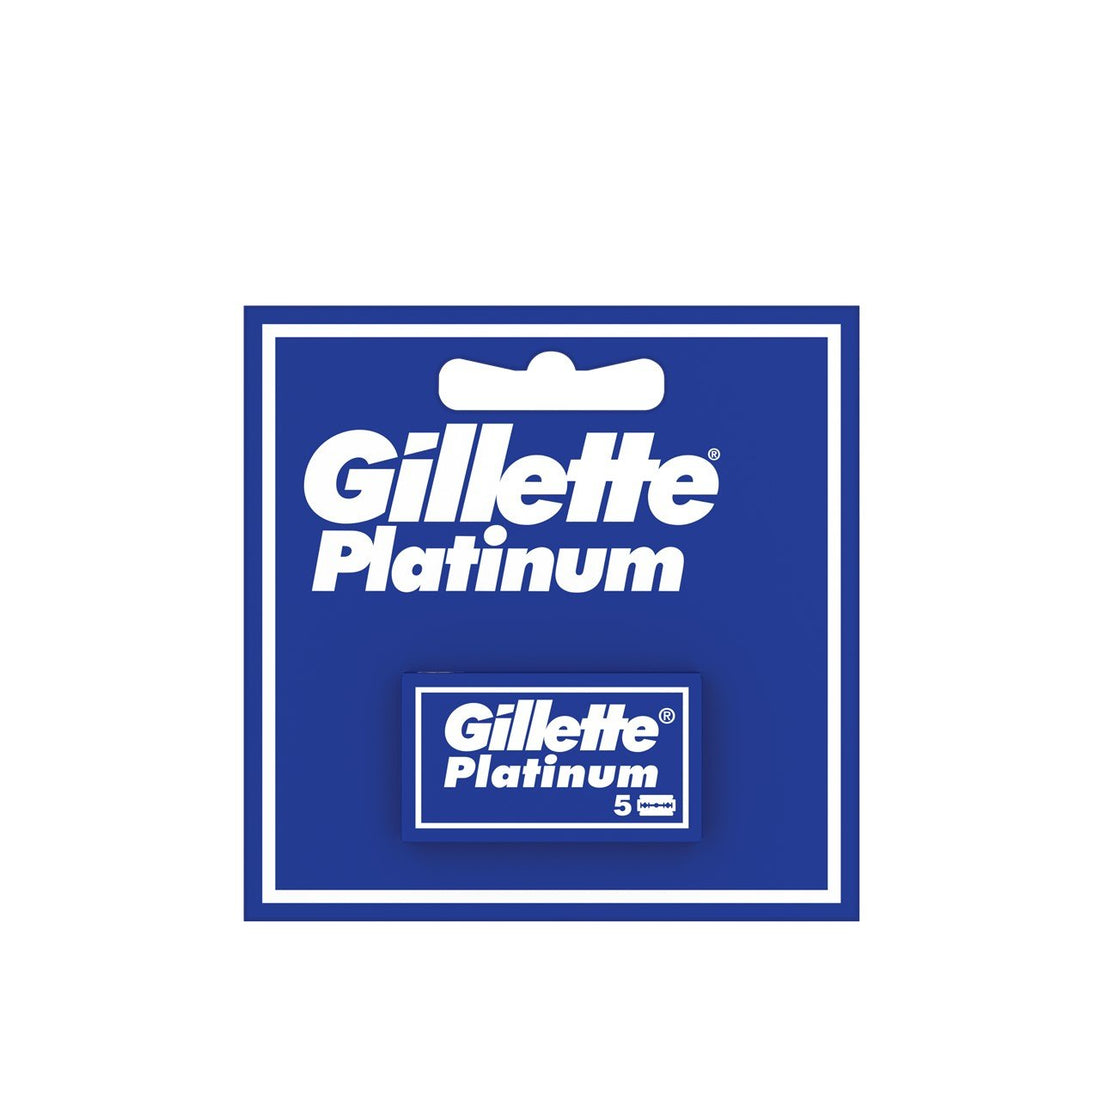 Lâminas de barbear Gillette Platinum x5